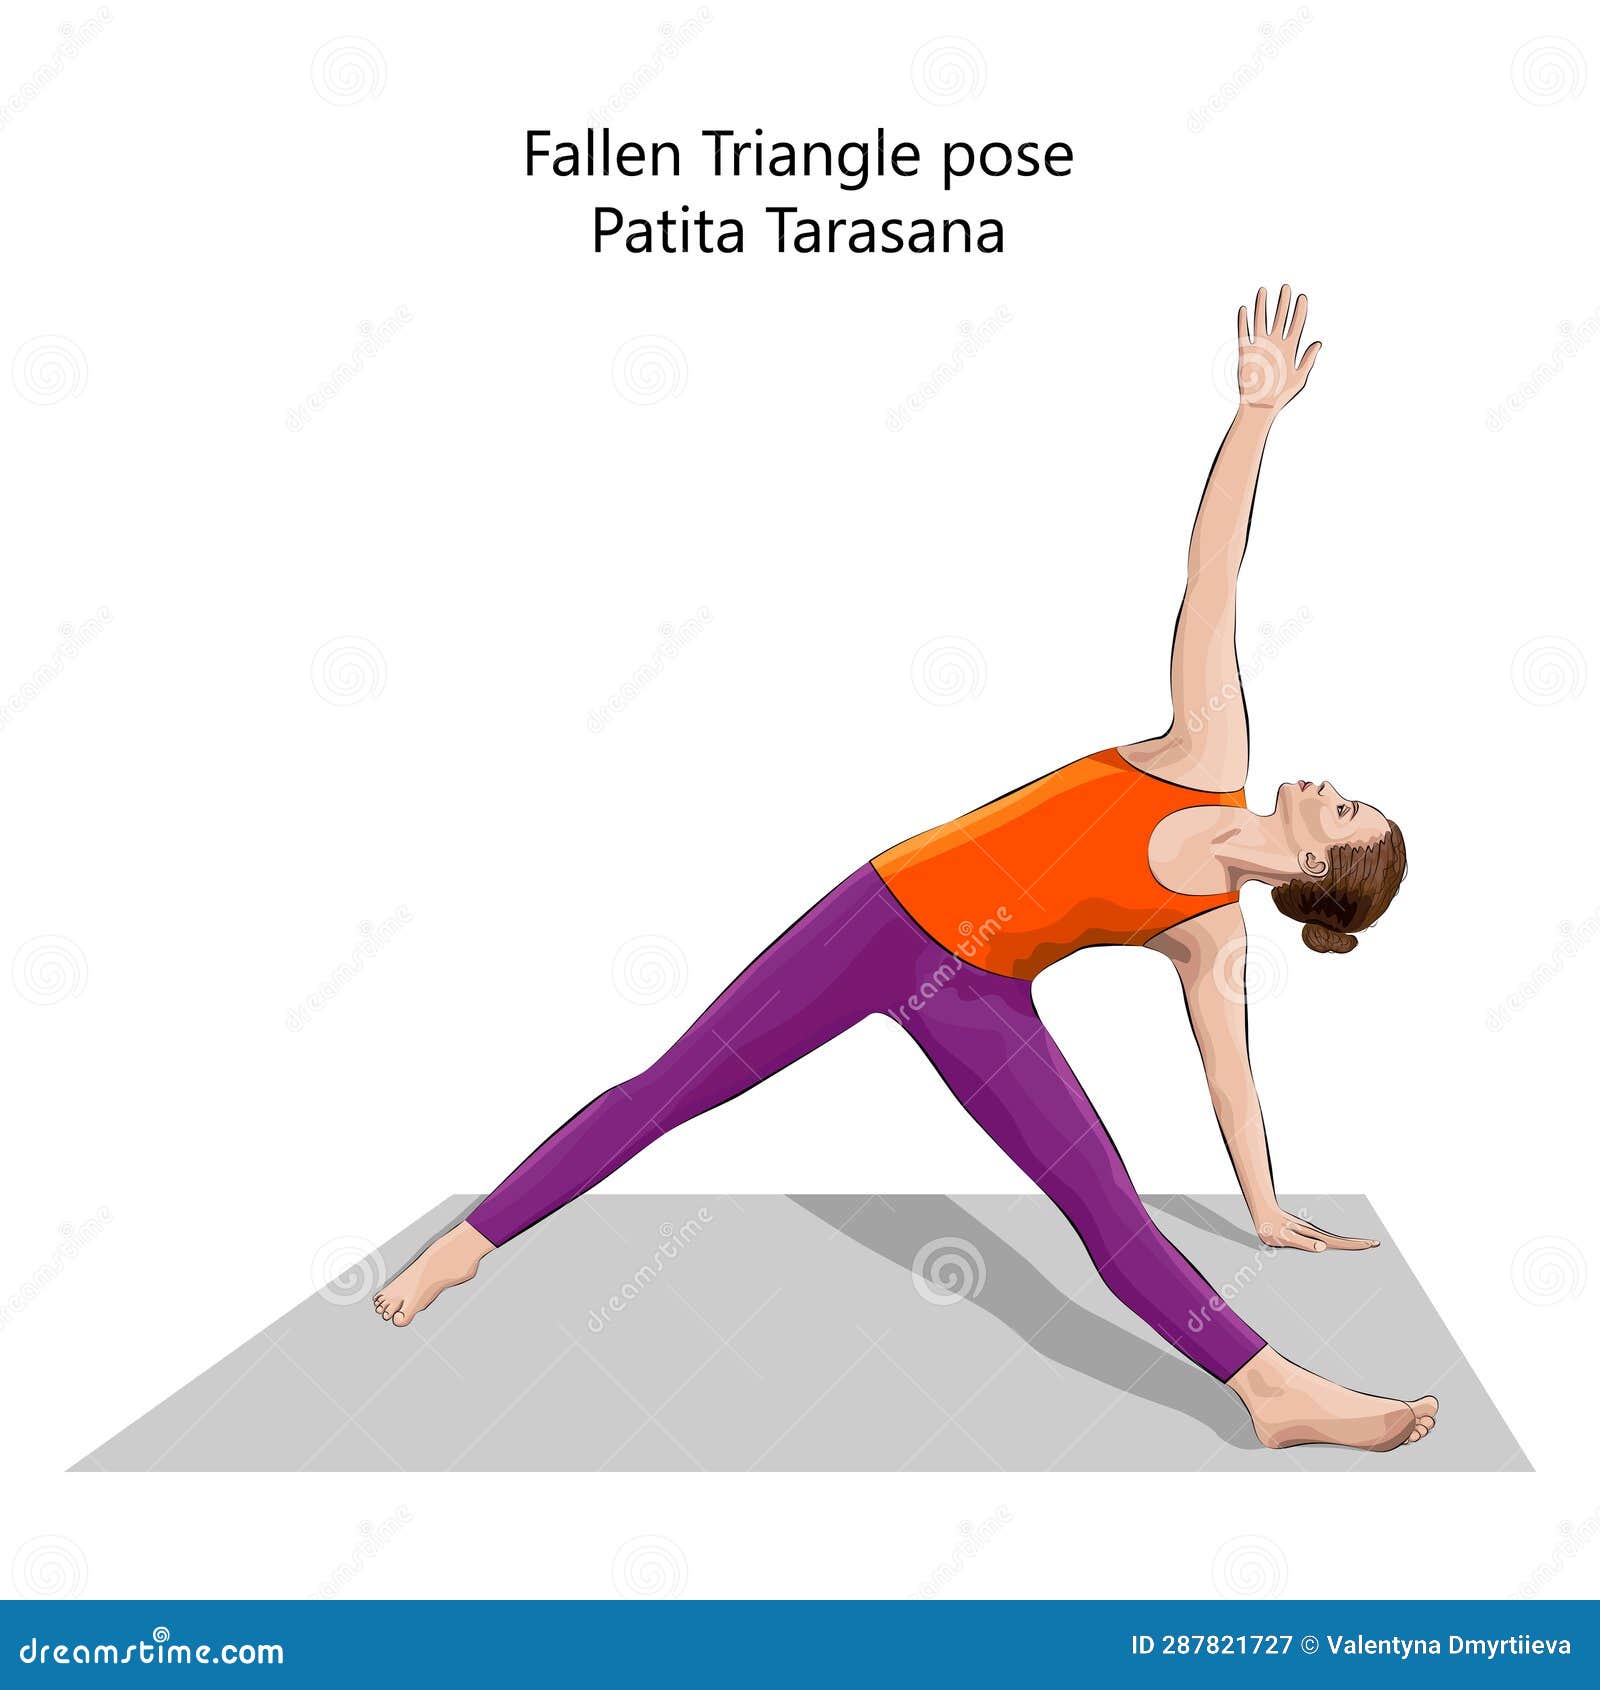 young woman practicing yoga exercise doing fallen triangle pose fallen star pose patita tarasana arm leg support backbend 287821727